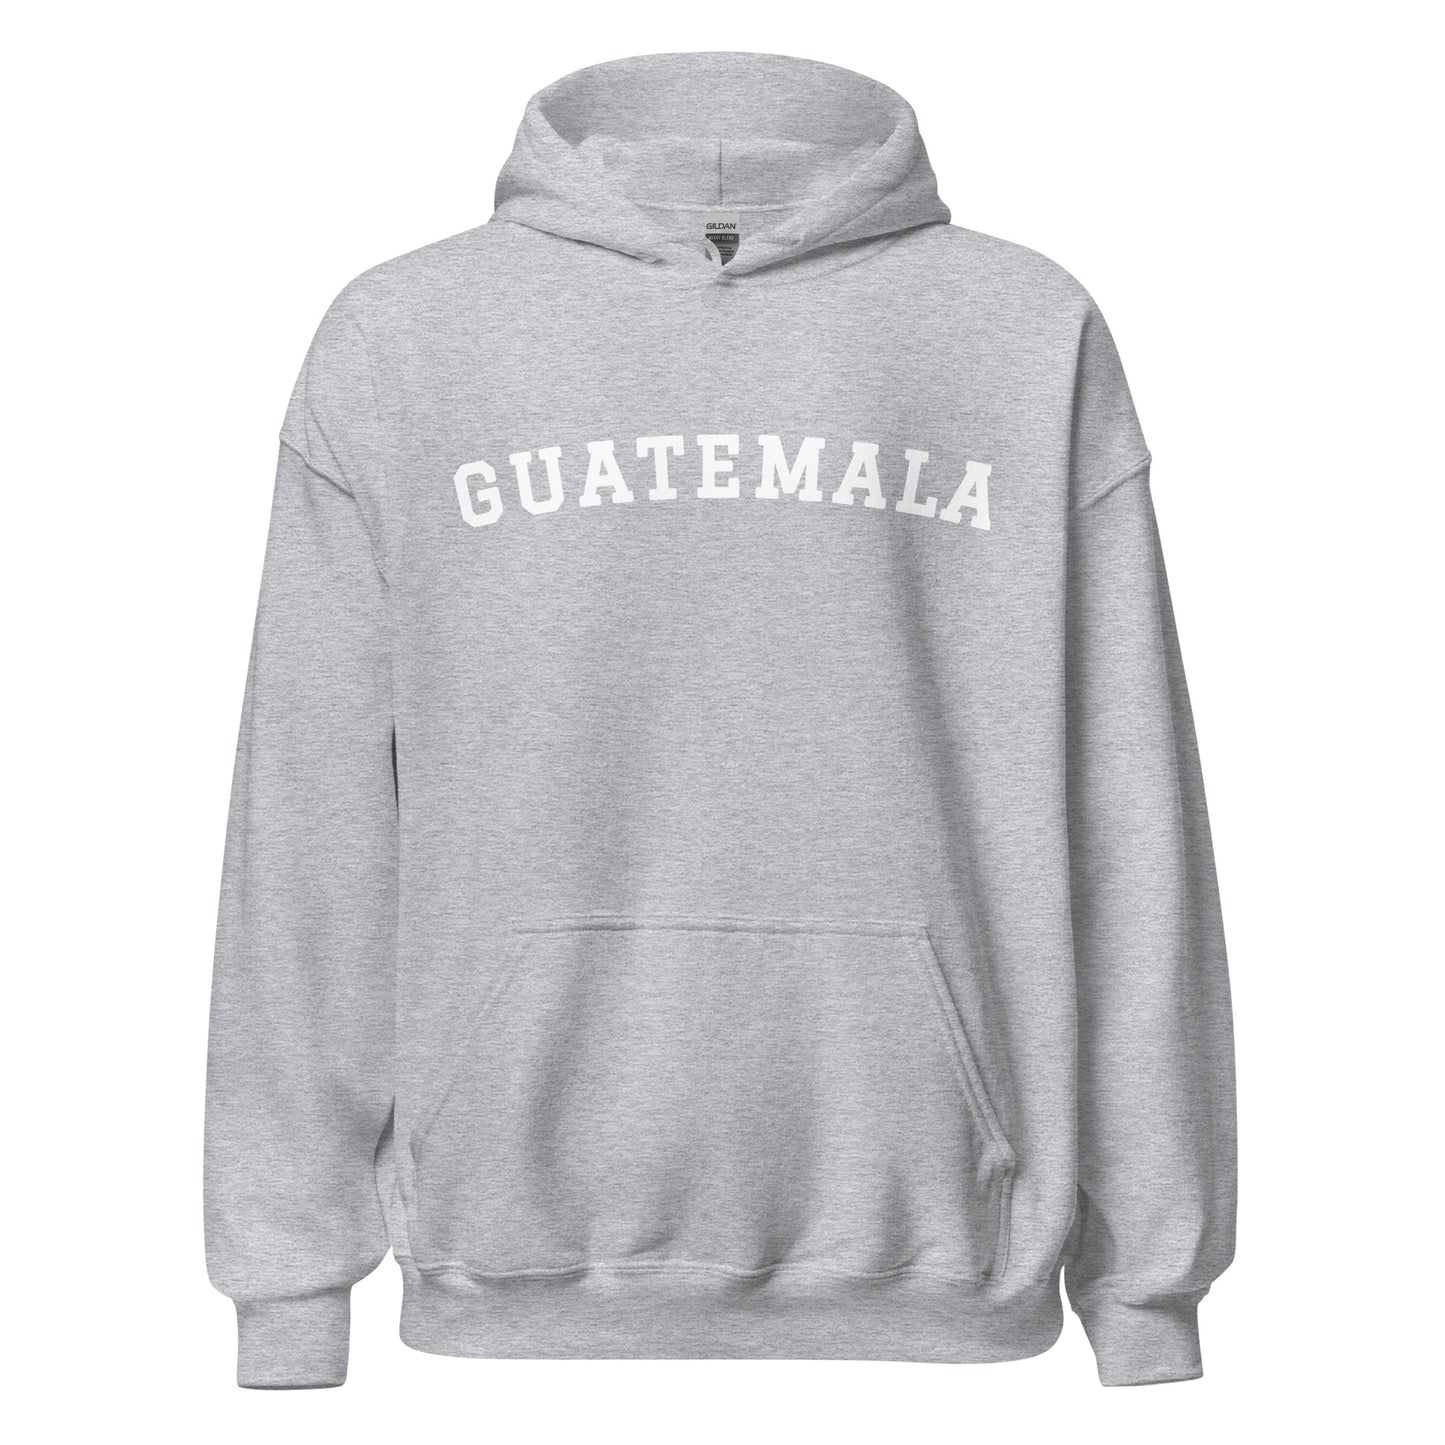 Mi Orgullo Guatemala Unisex Hoodie